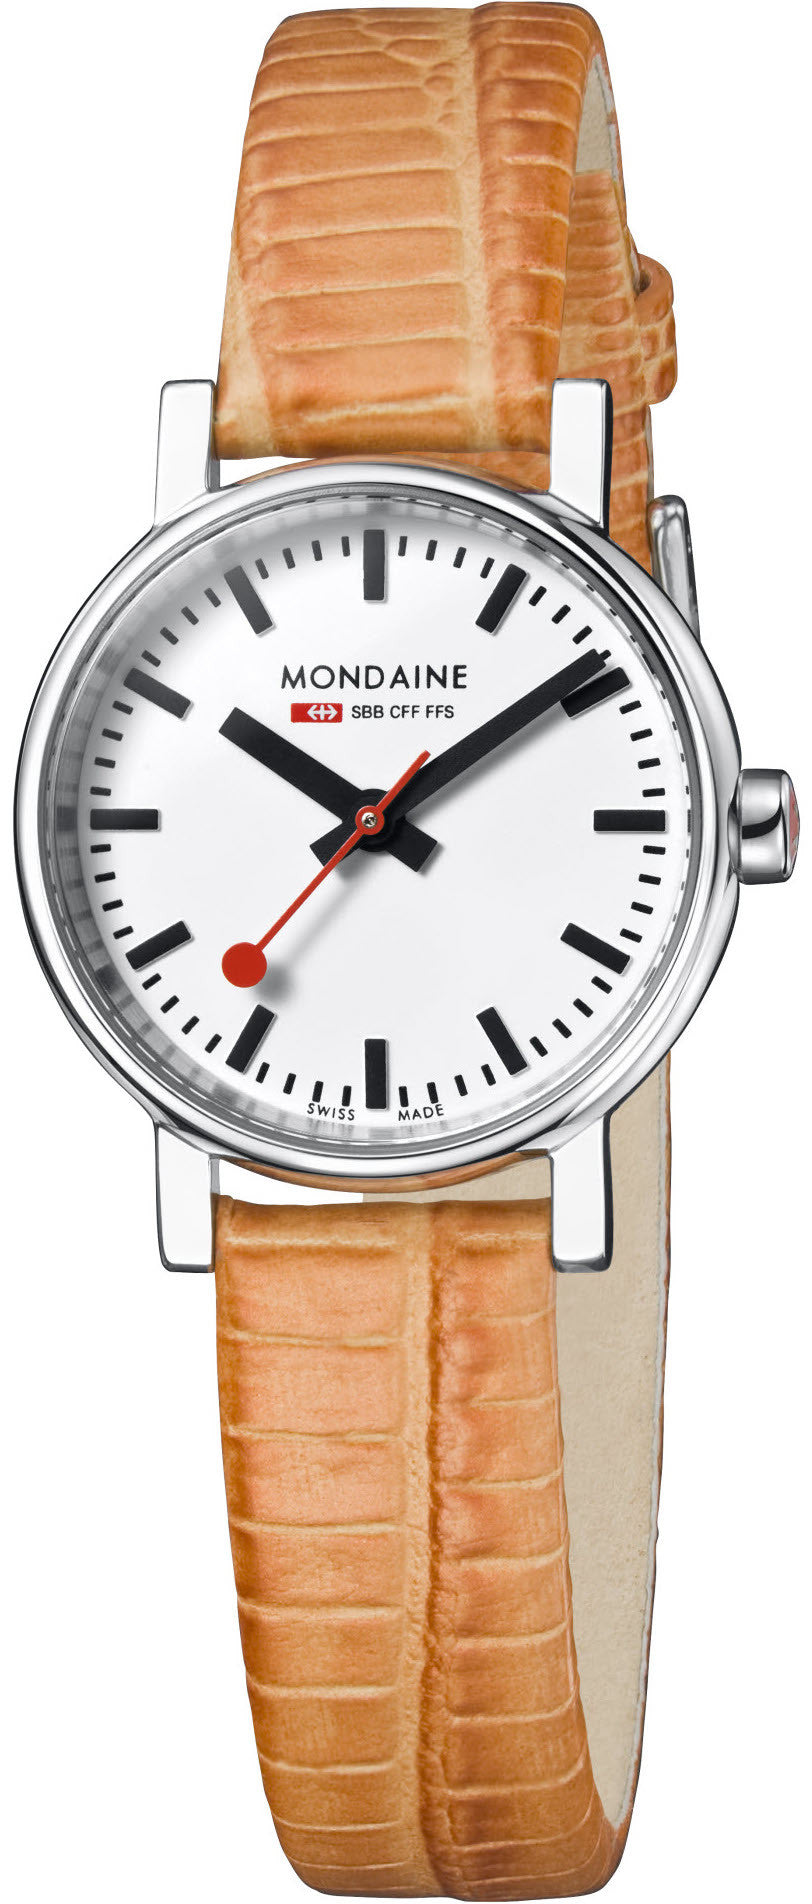 Photos - Wrist Watch Mondaine Watch SBB Evo Petite - White MD-164 